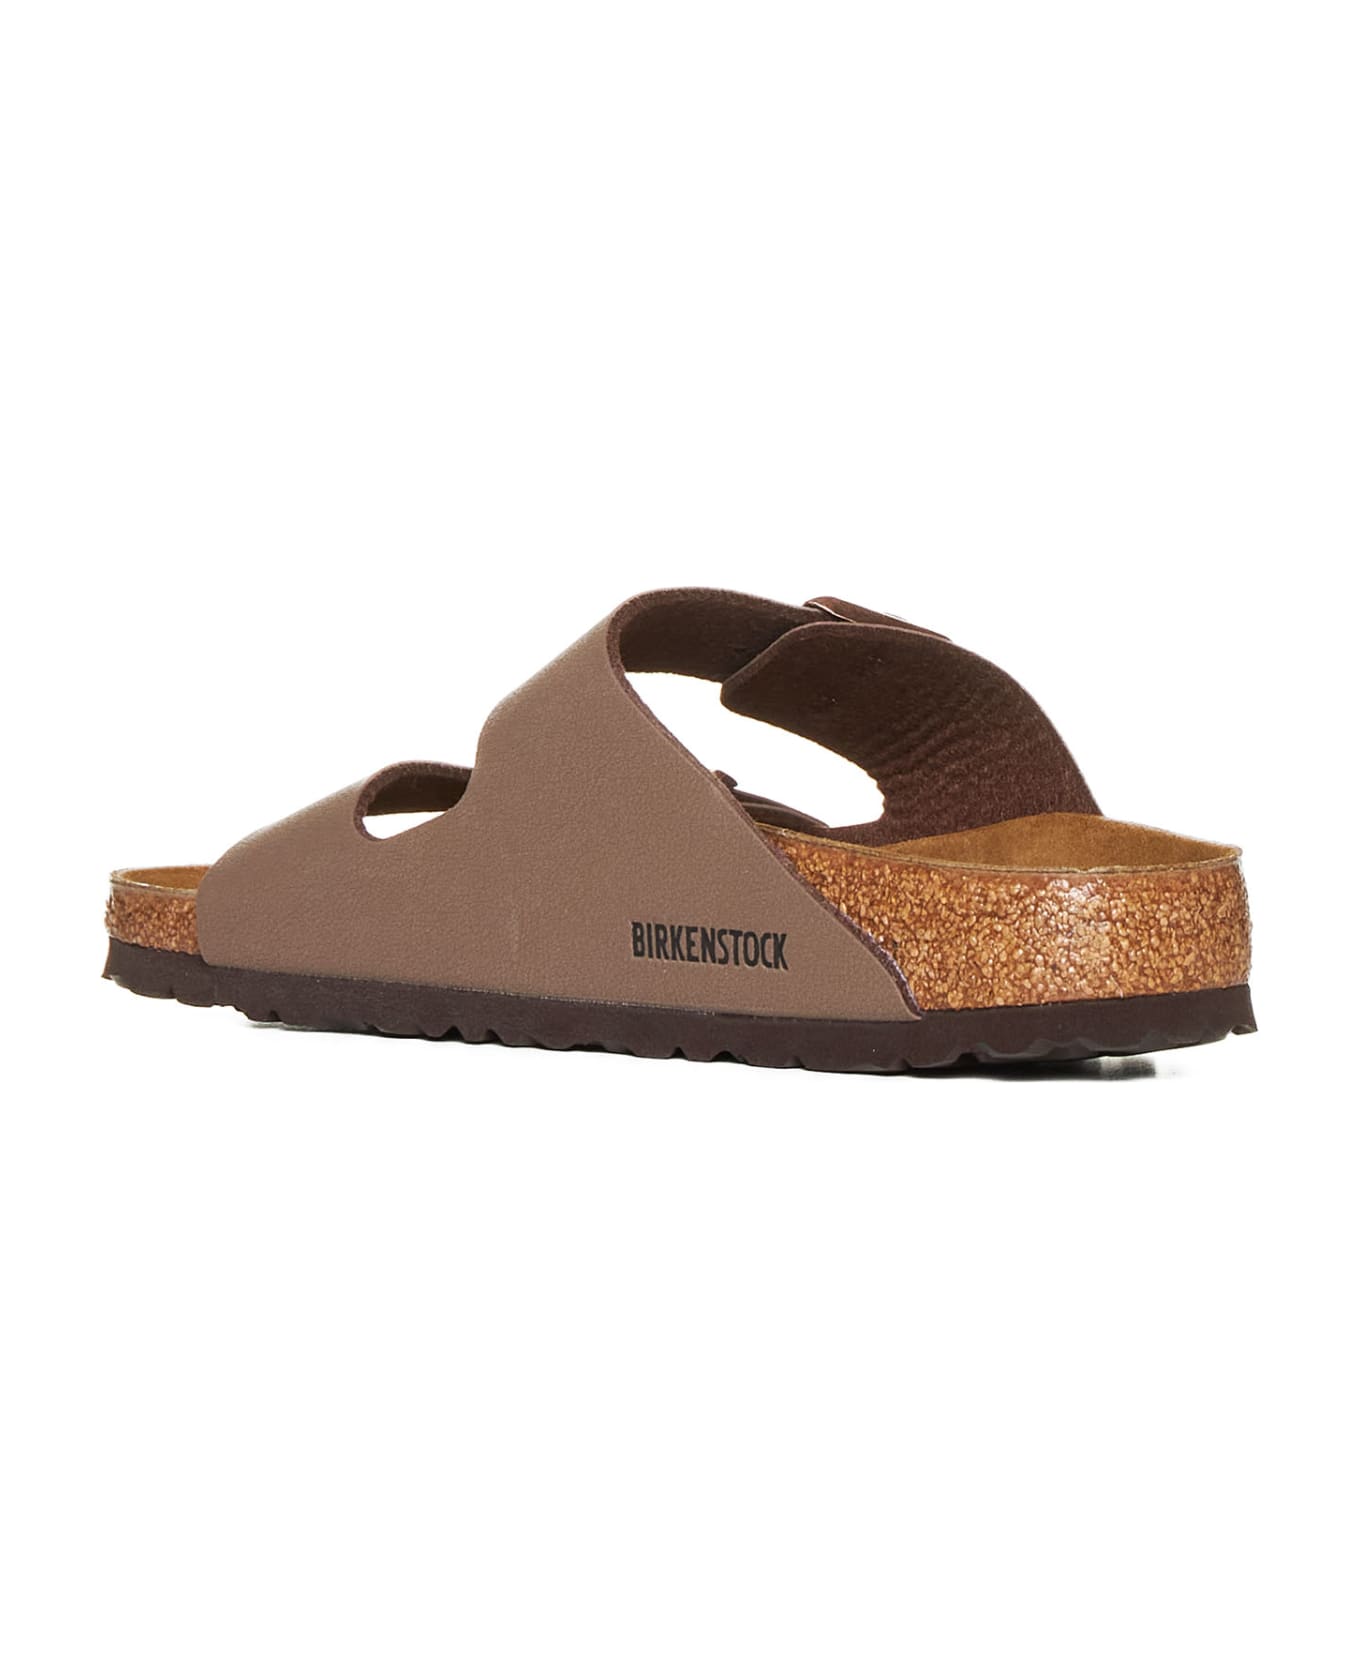 Birkenstock Sandals - Mocca